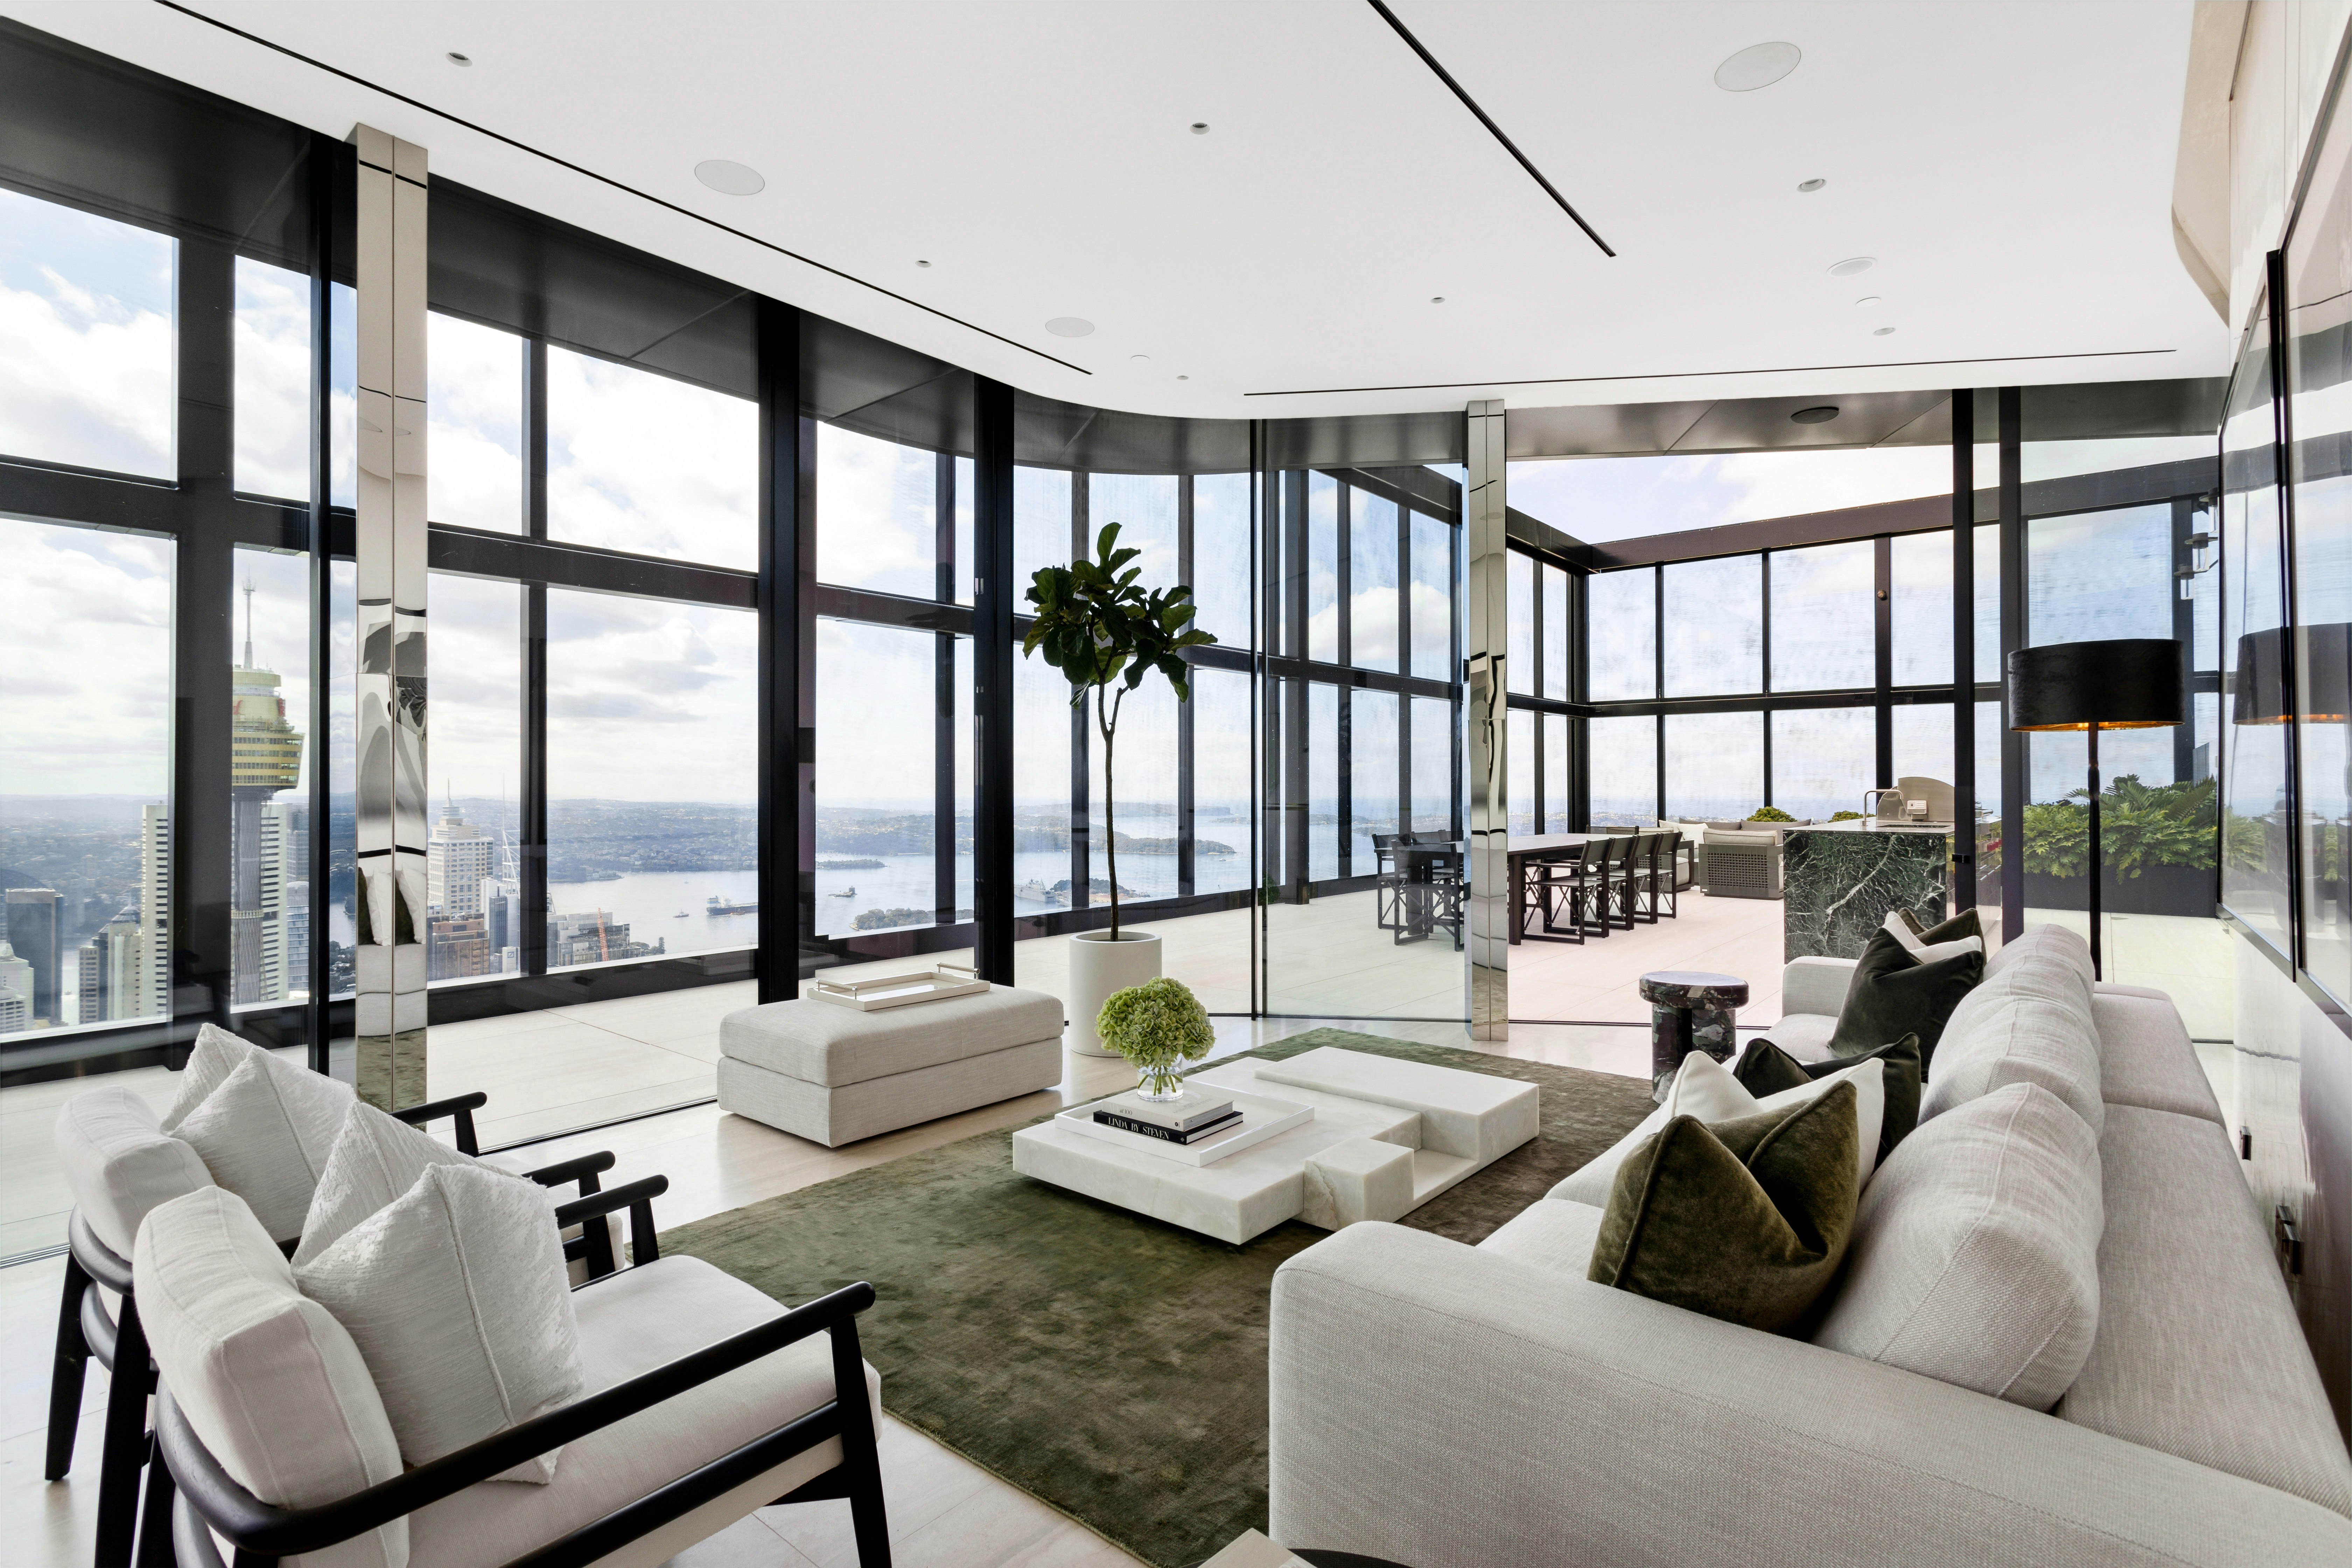 Gavin Rubinstein & Chrissie Ren: New York-style launch for Sydney’s incredible 360-degree penthouse